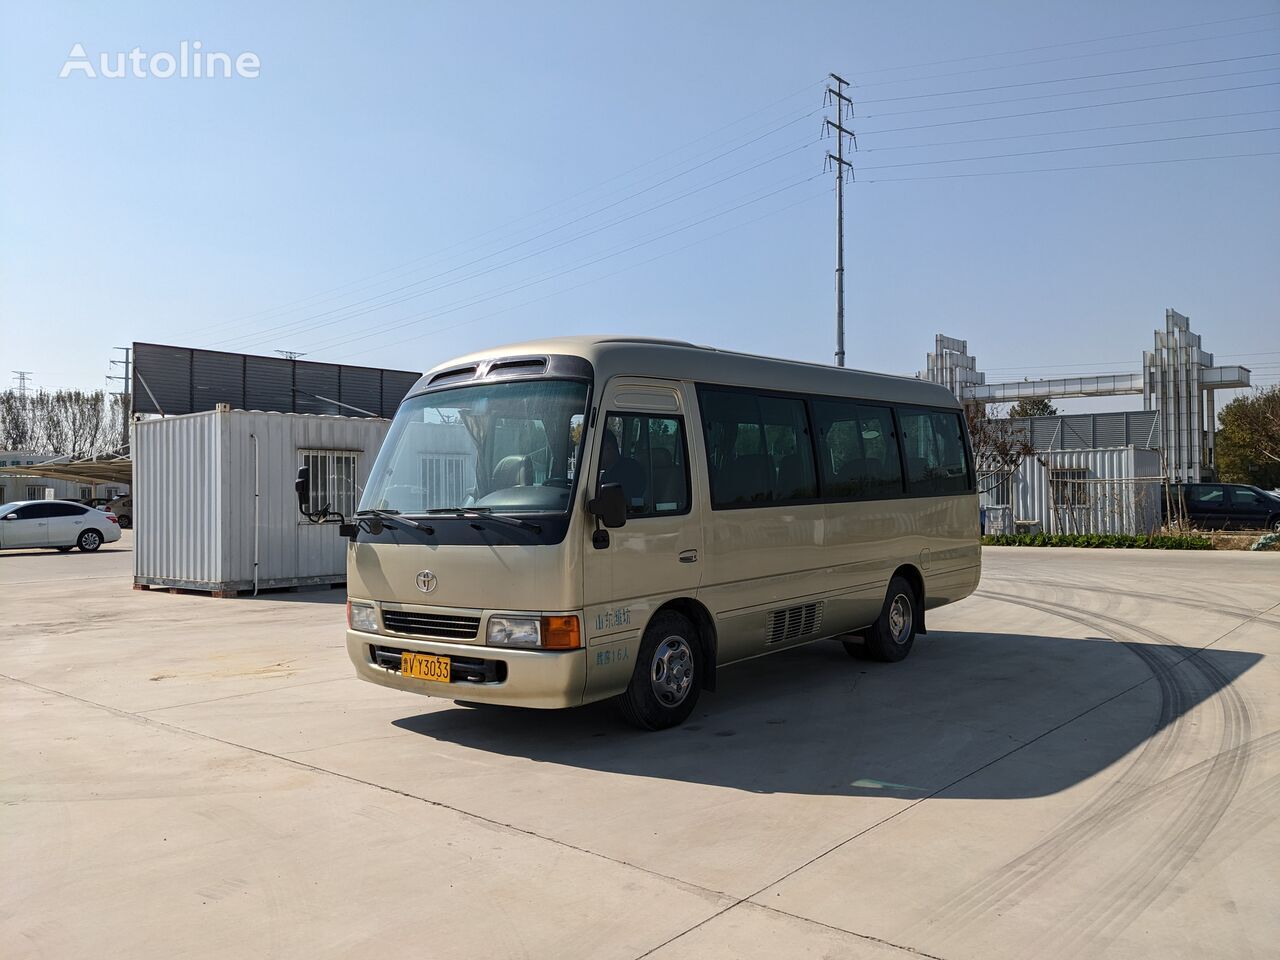 Minibús, Furgoneta de pasajeros TOYOTA Coaster original Japanese passenger bus: foto 3